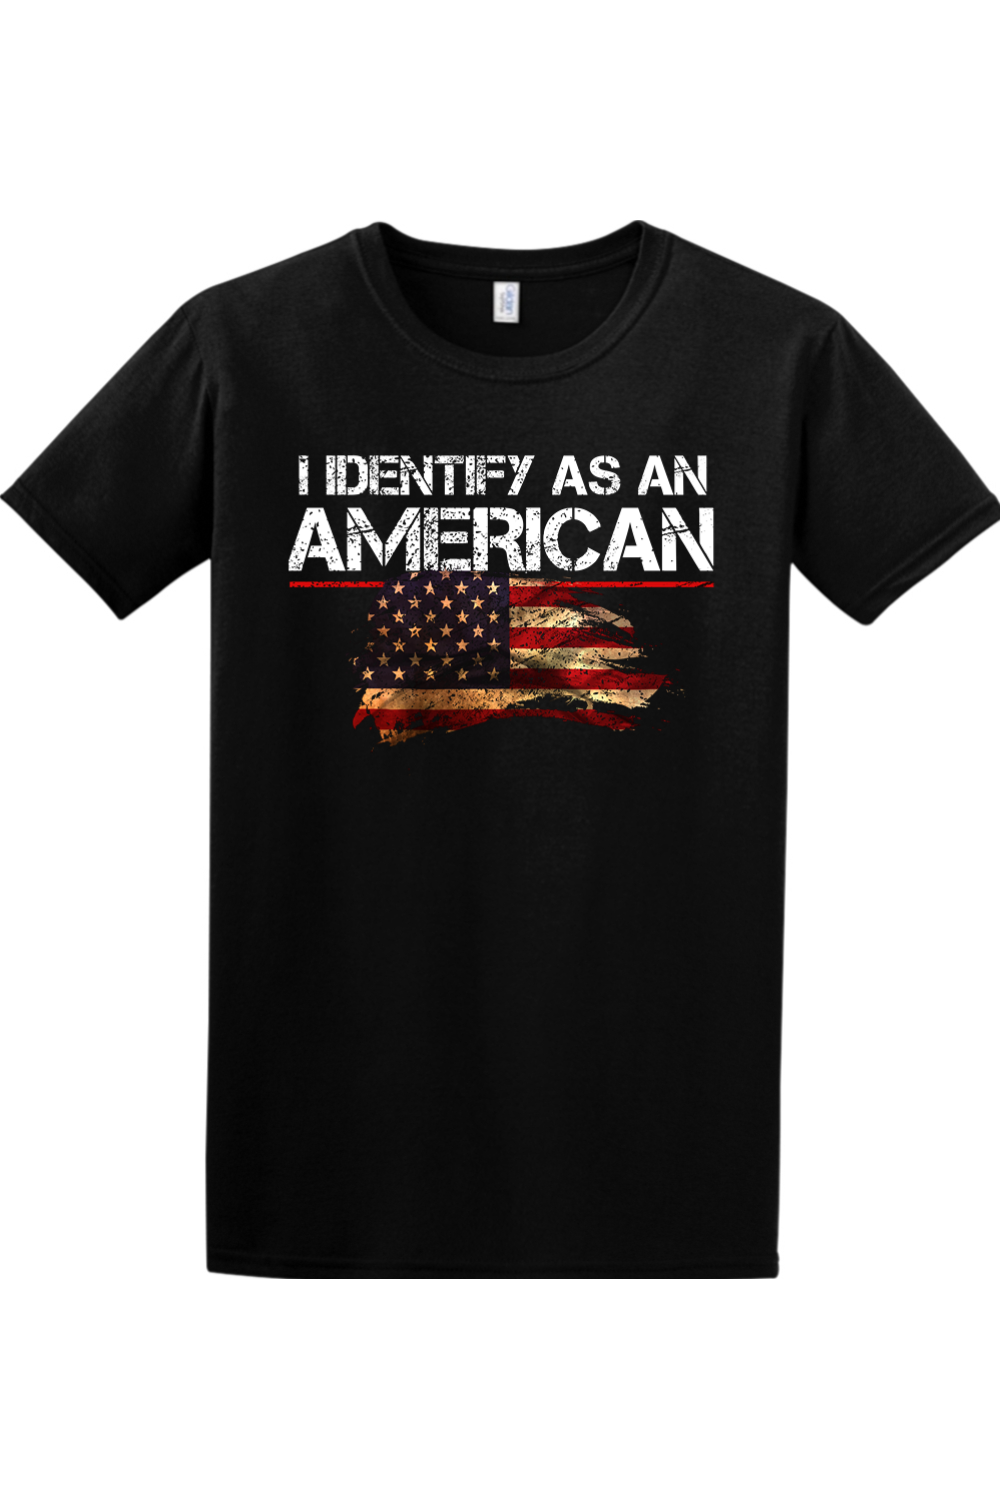 I Identify as an American